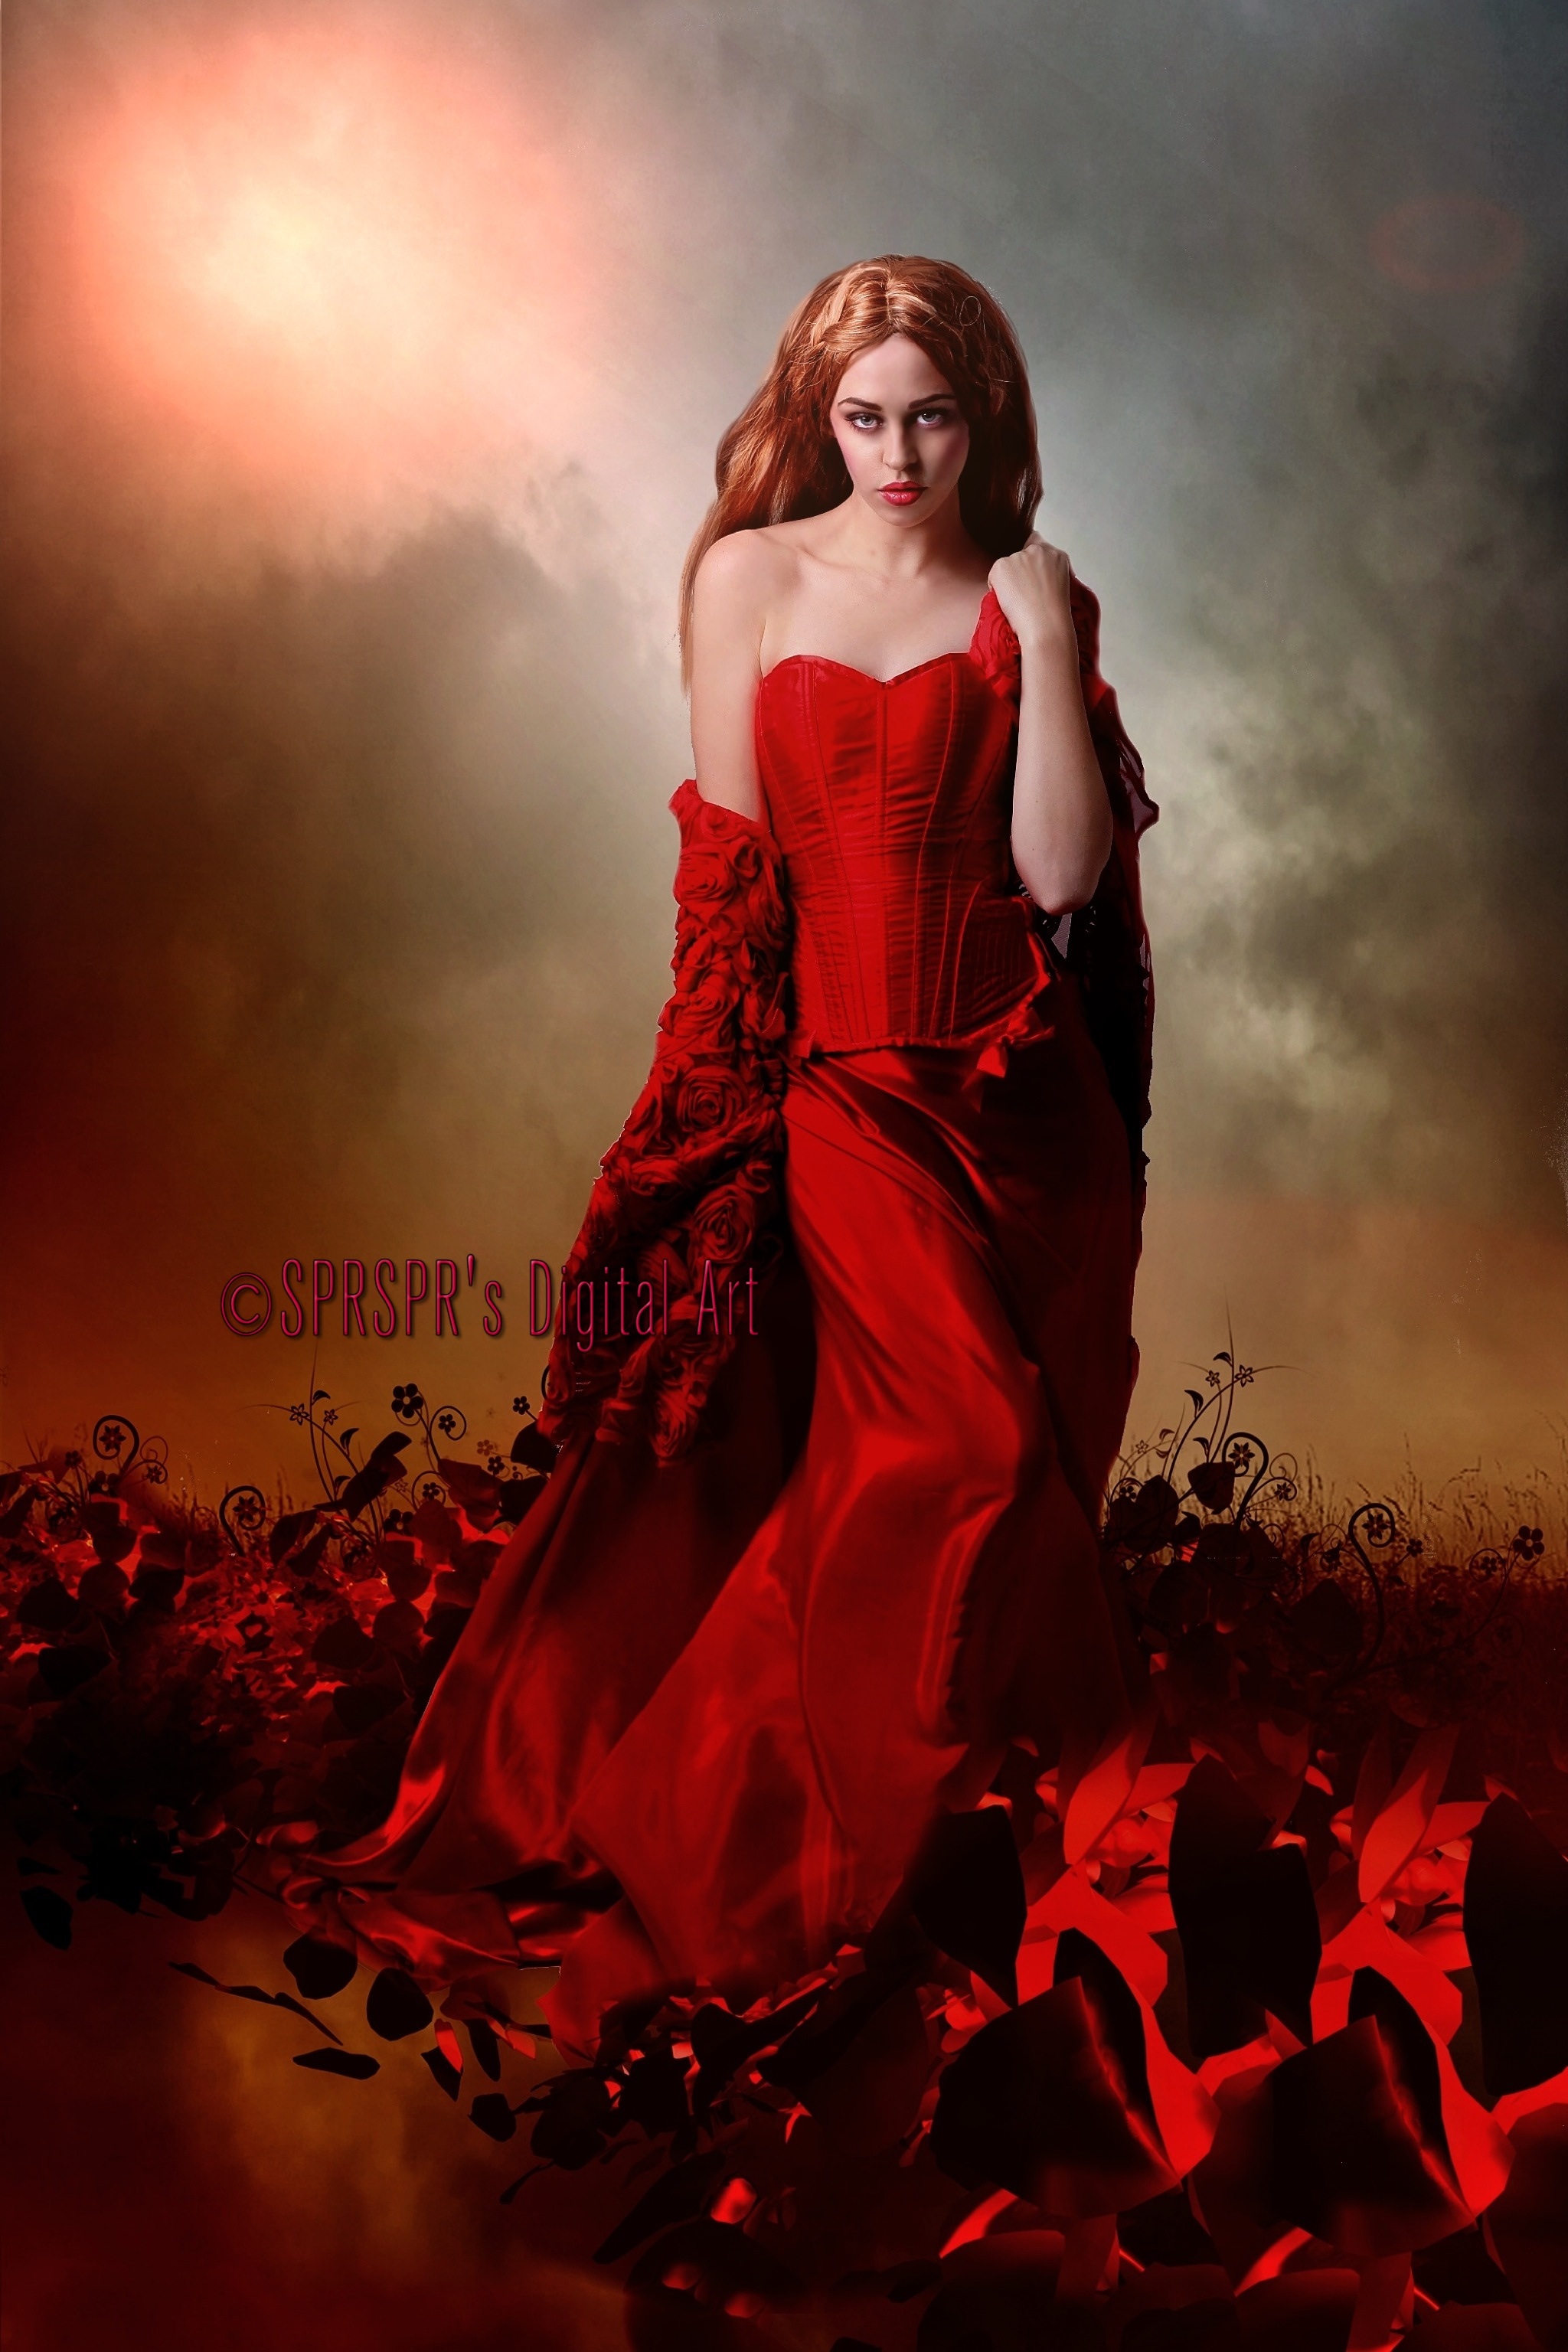 Lady in Red by SPRSPRsDigitalArt on DeviantArt